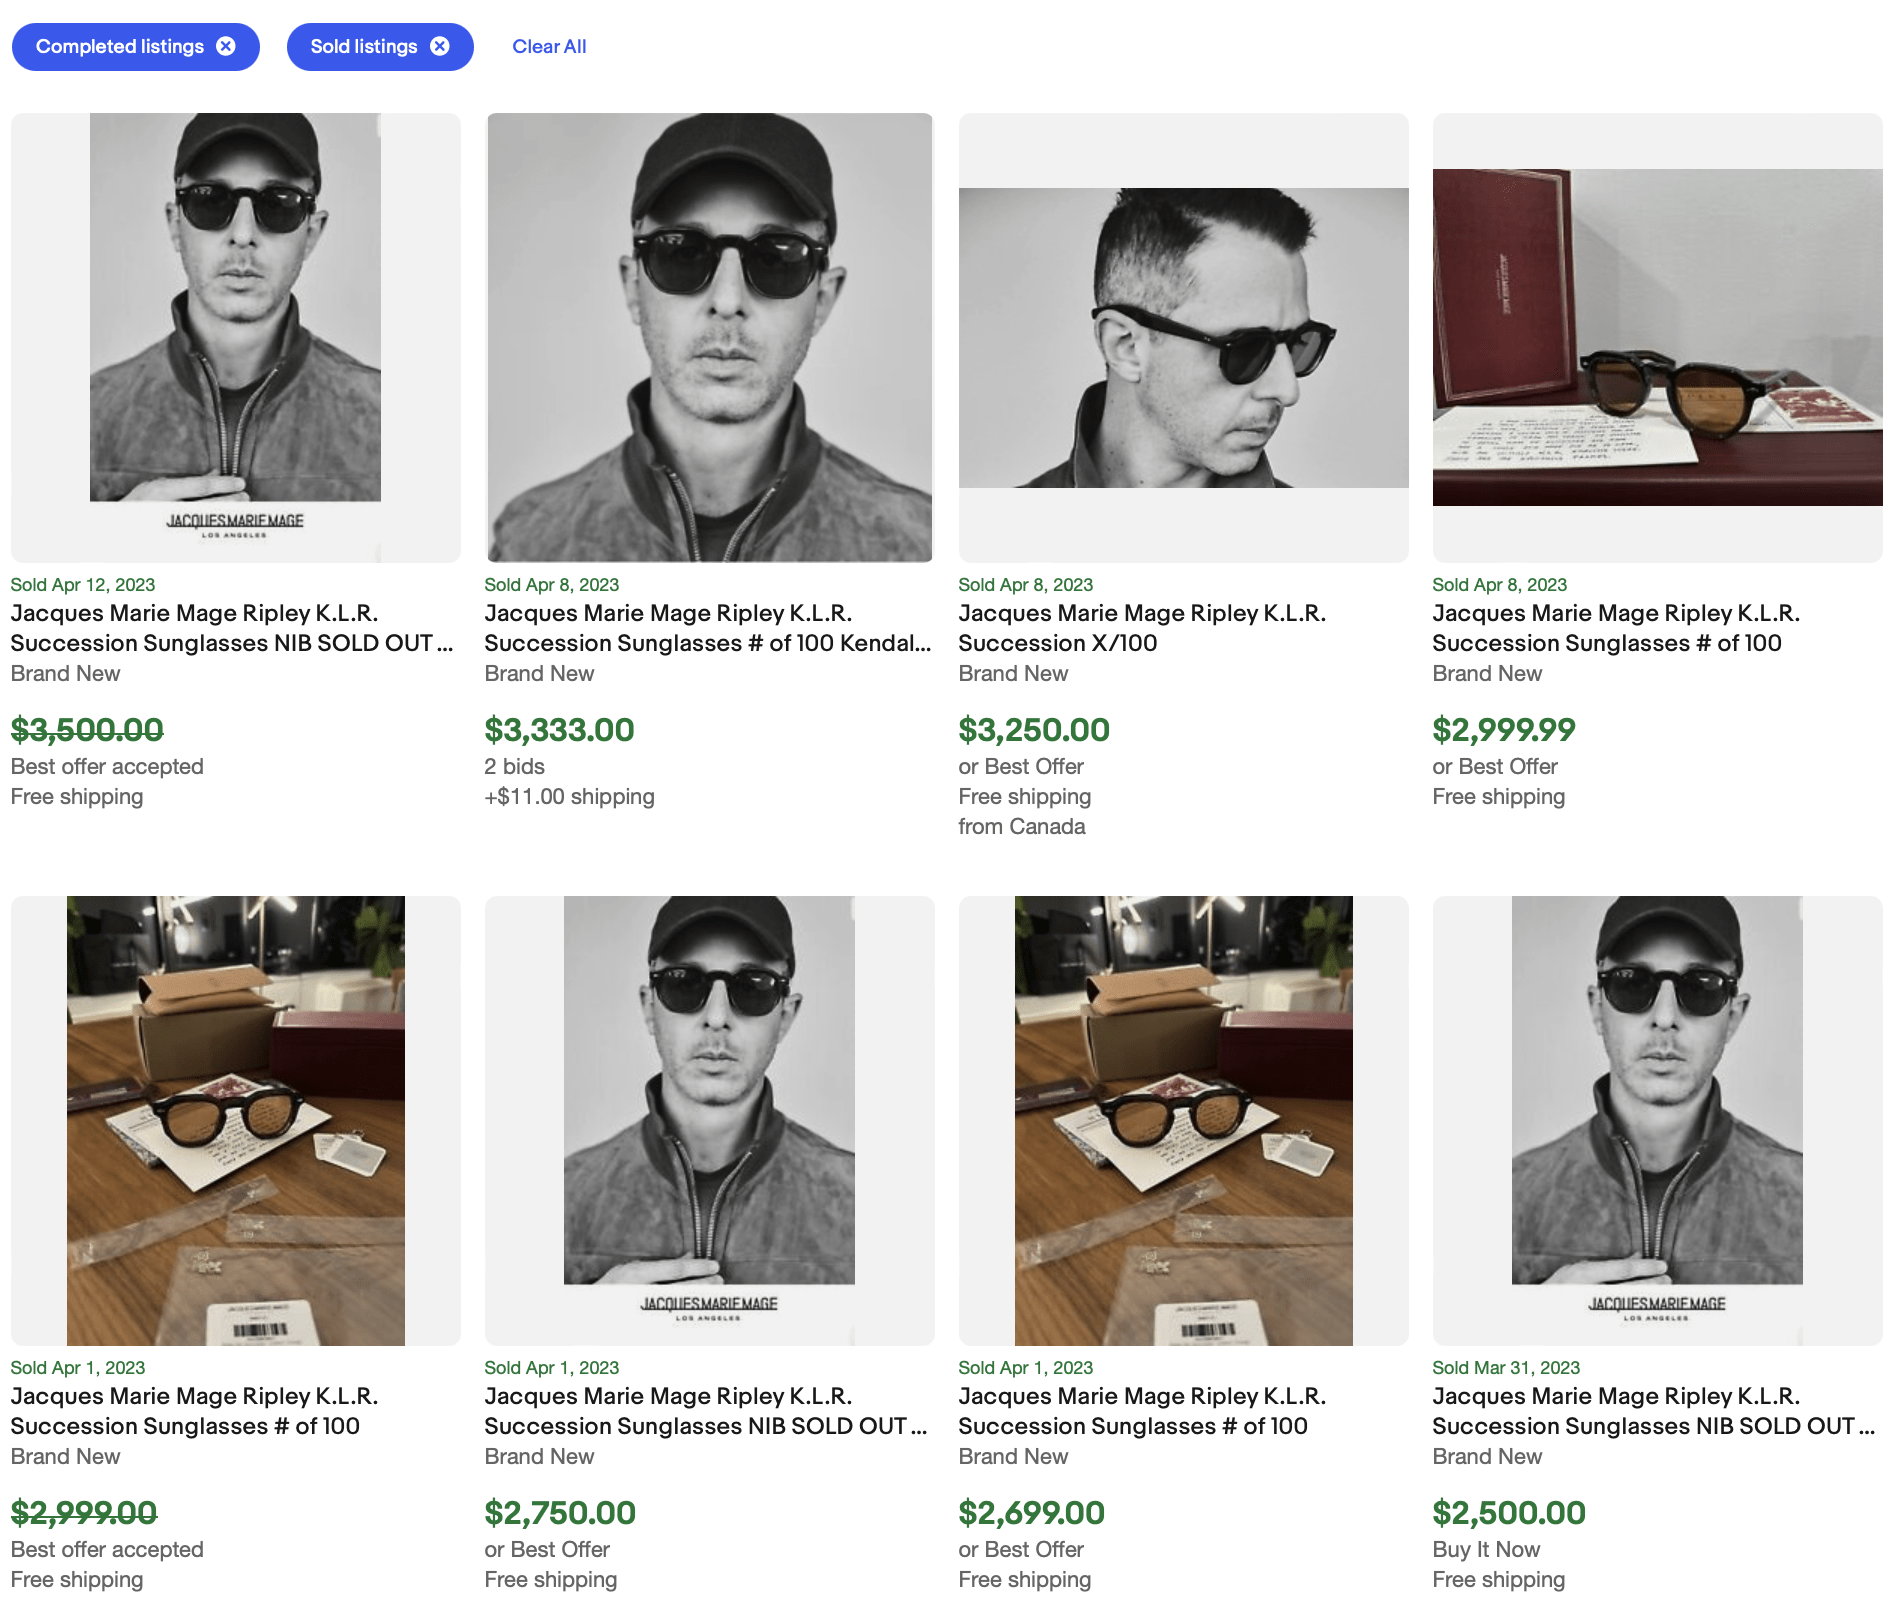 Succession Sunglasses for sale on eBay